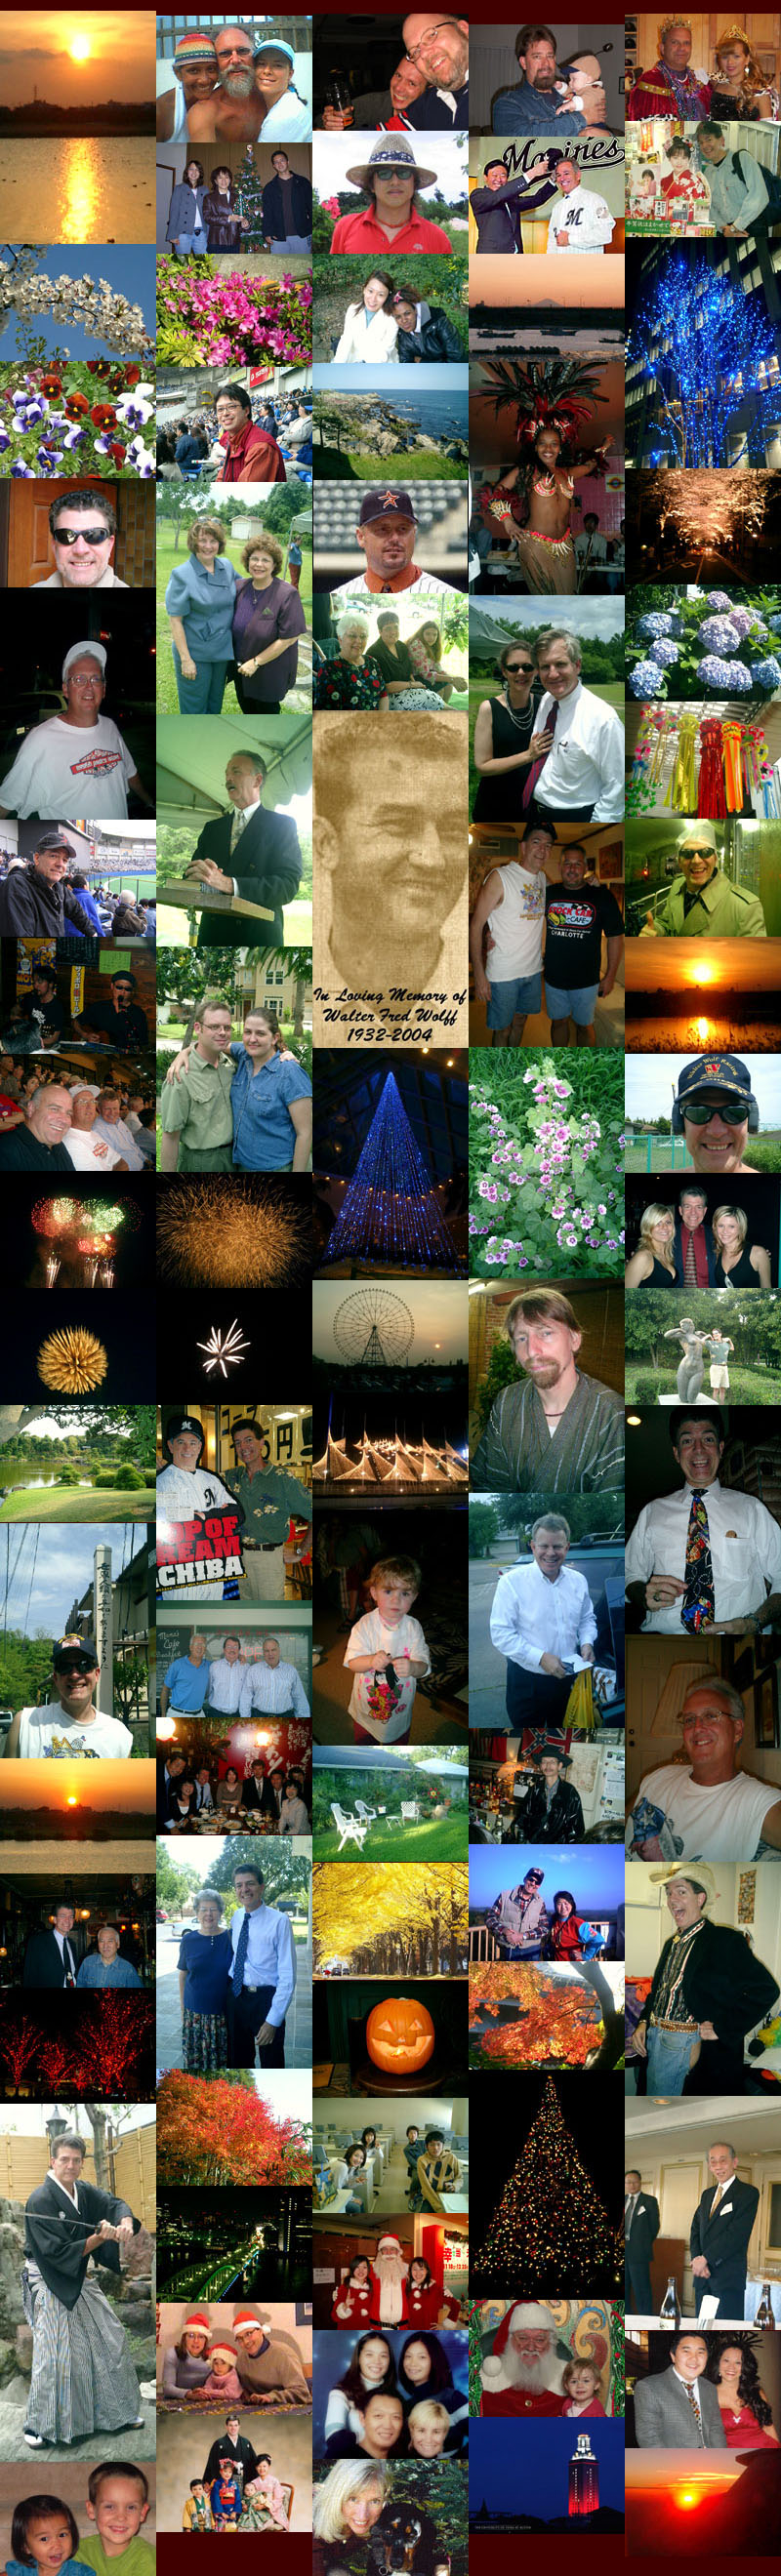 Gary Wolff's 2004 photo collage